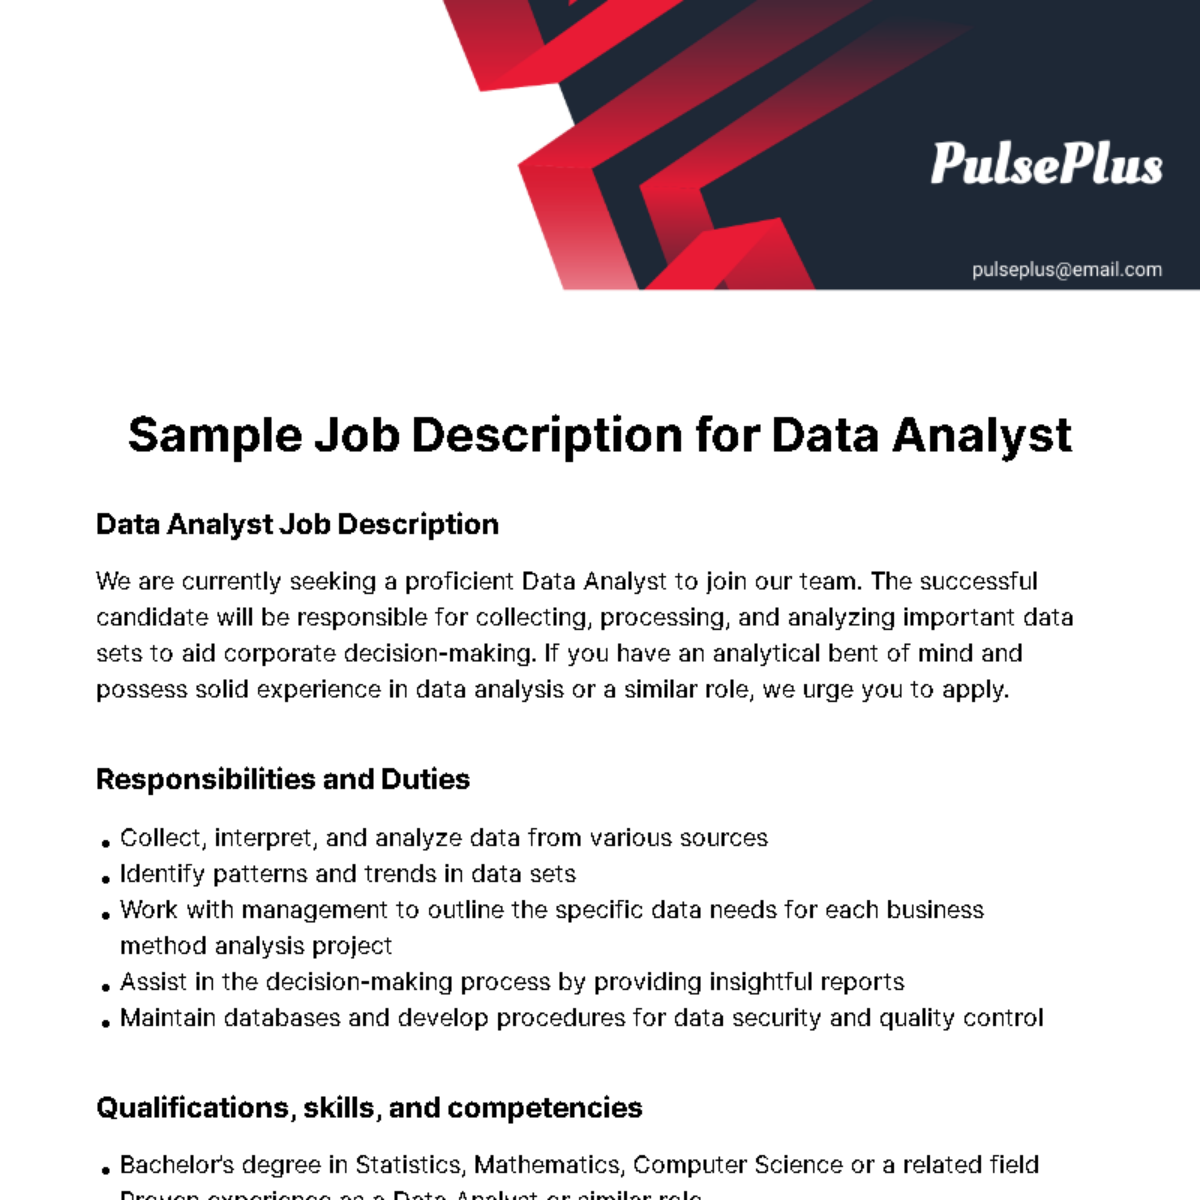 Sample Job Description for Data Analyst Template